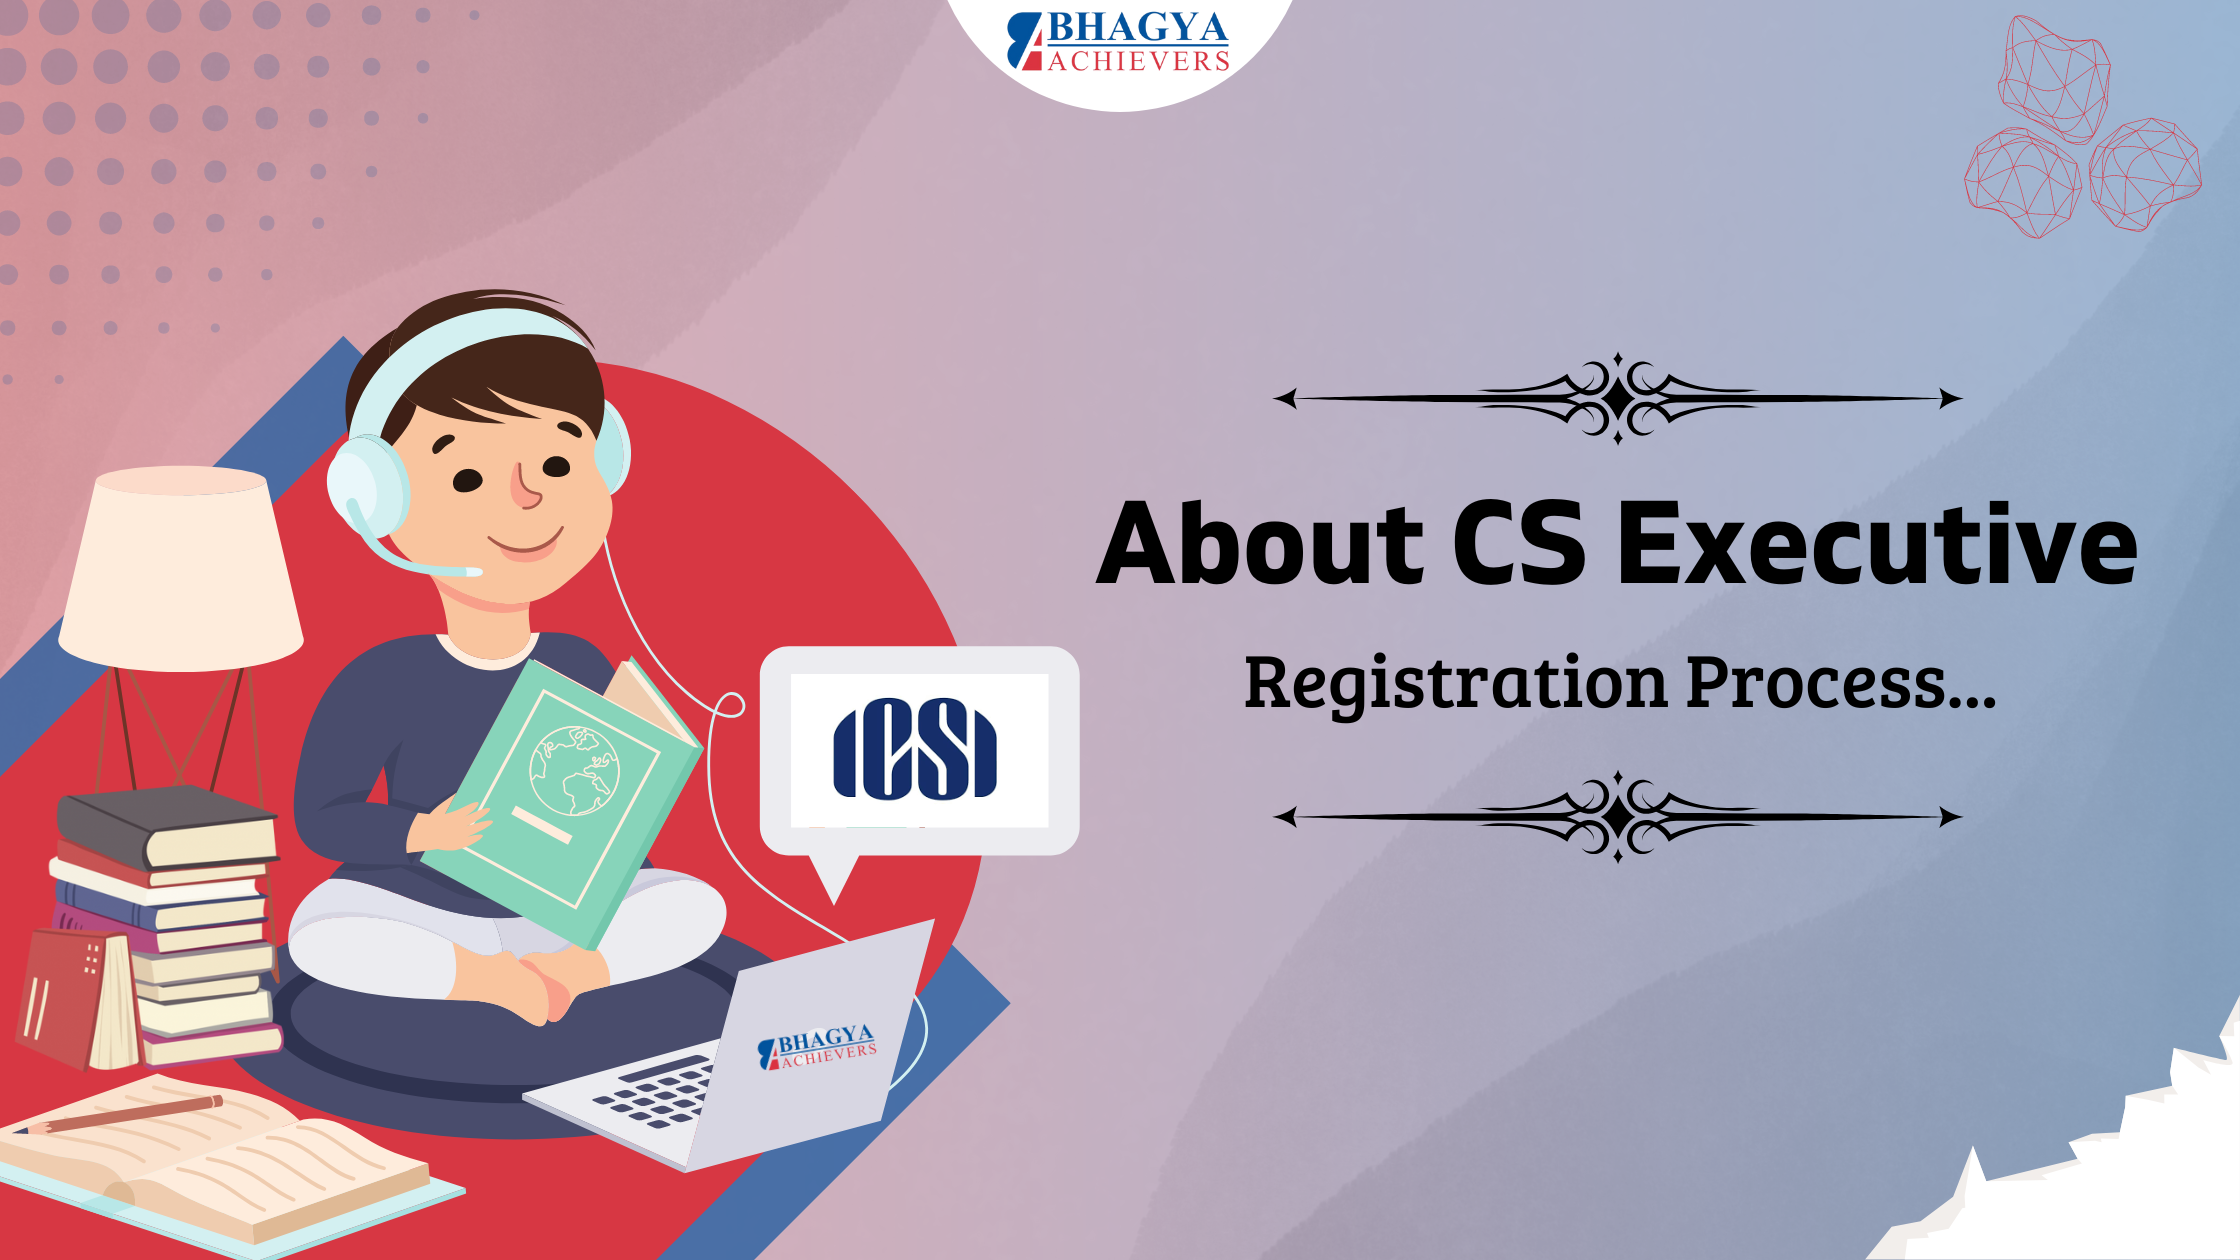 Registration Process for CS Executive - Bhagya Achievers